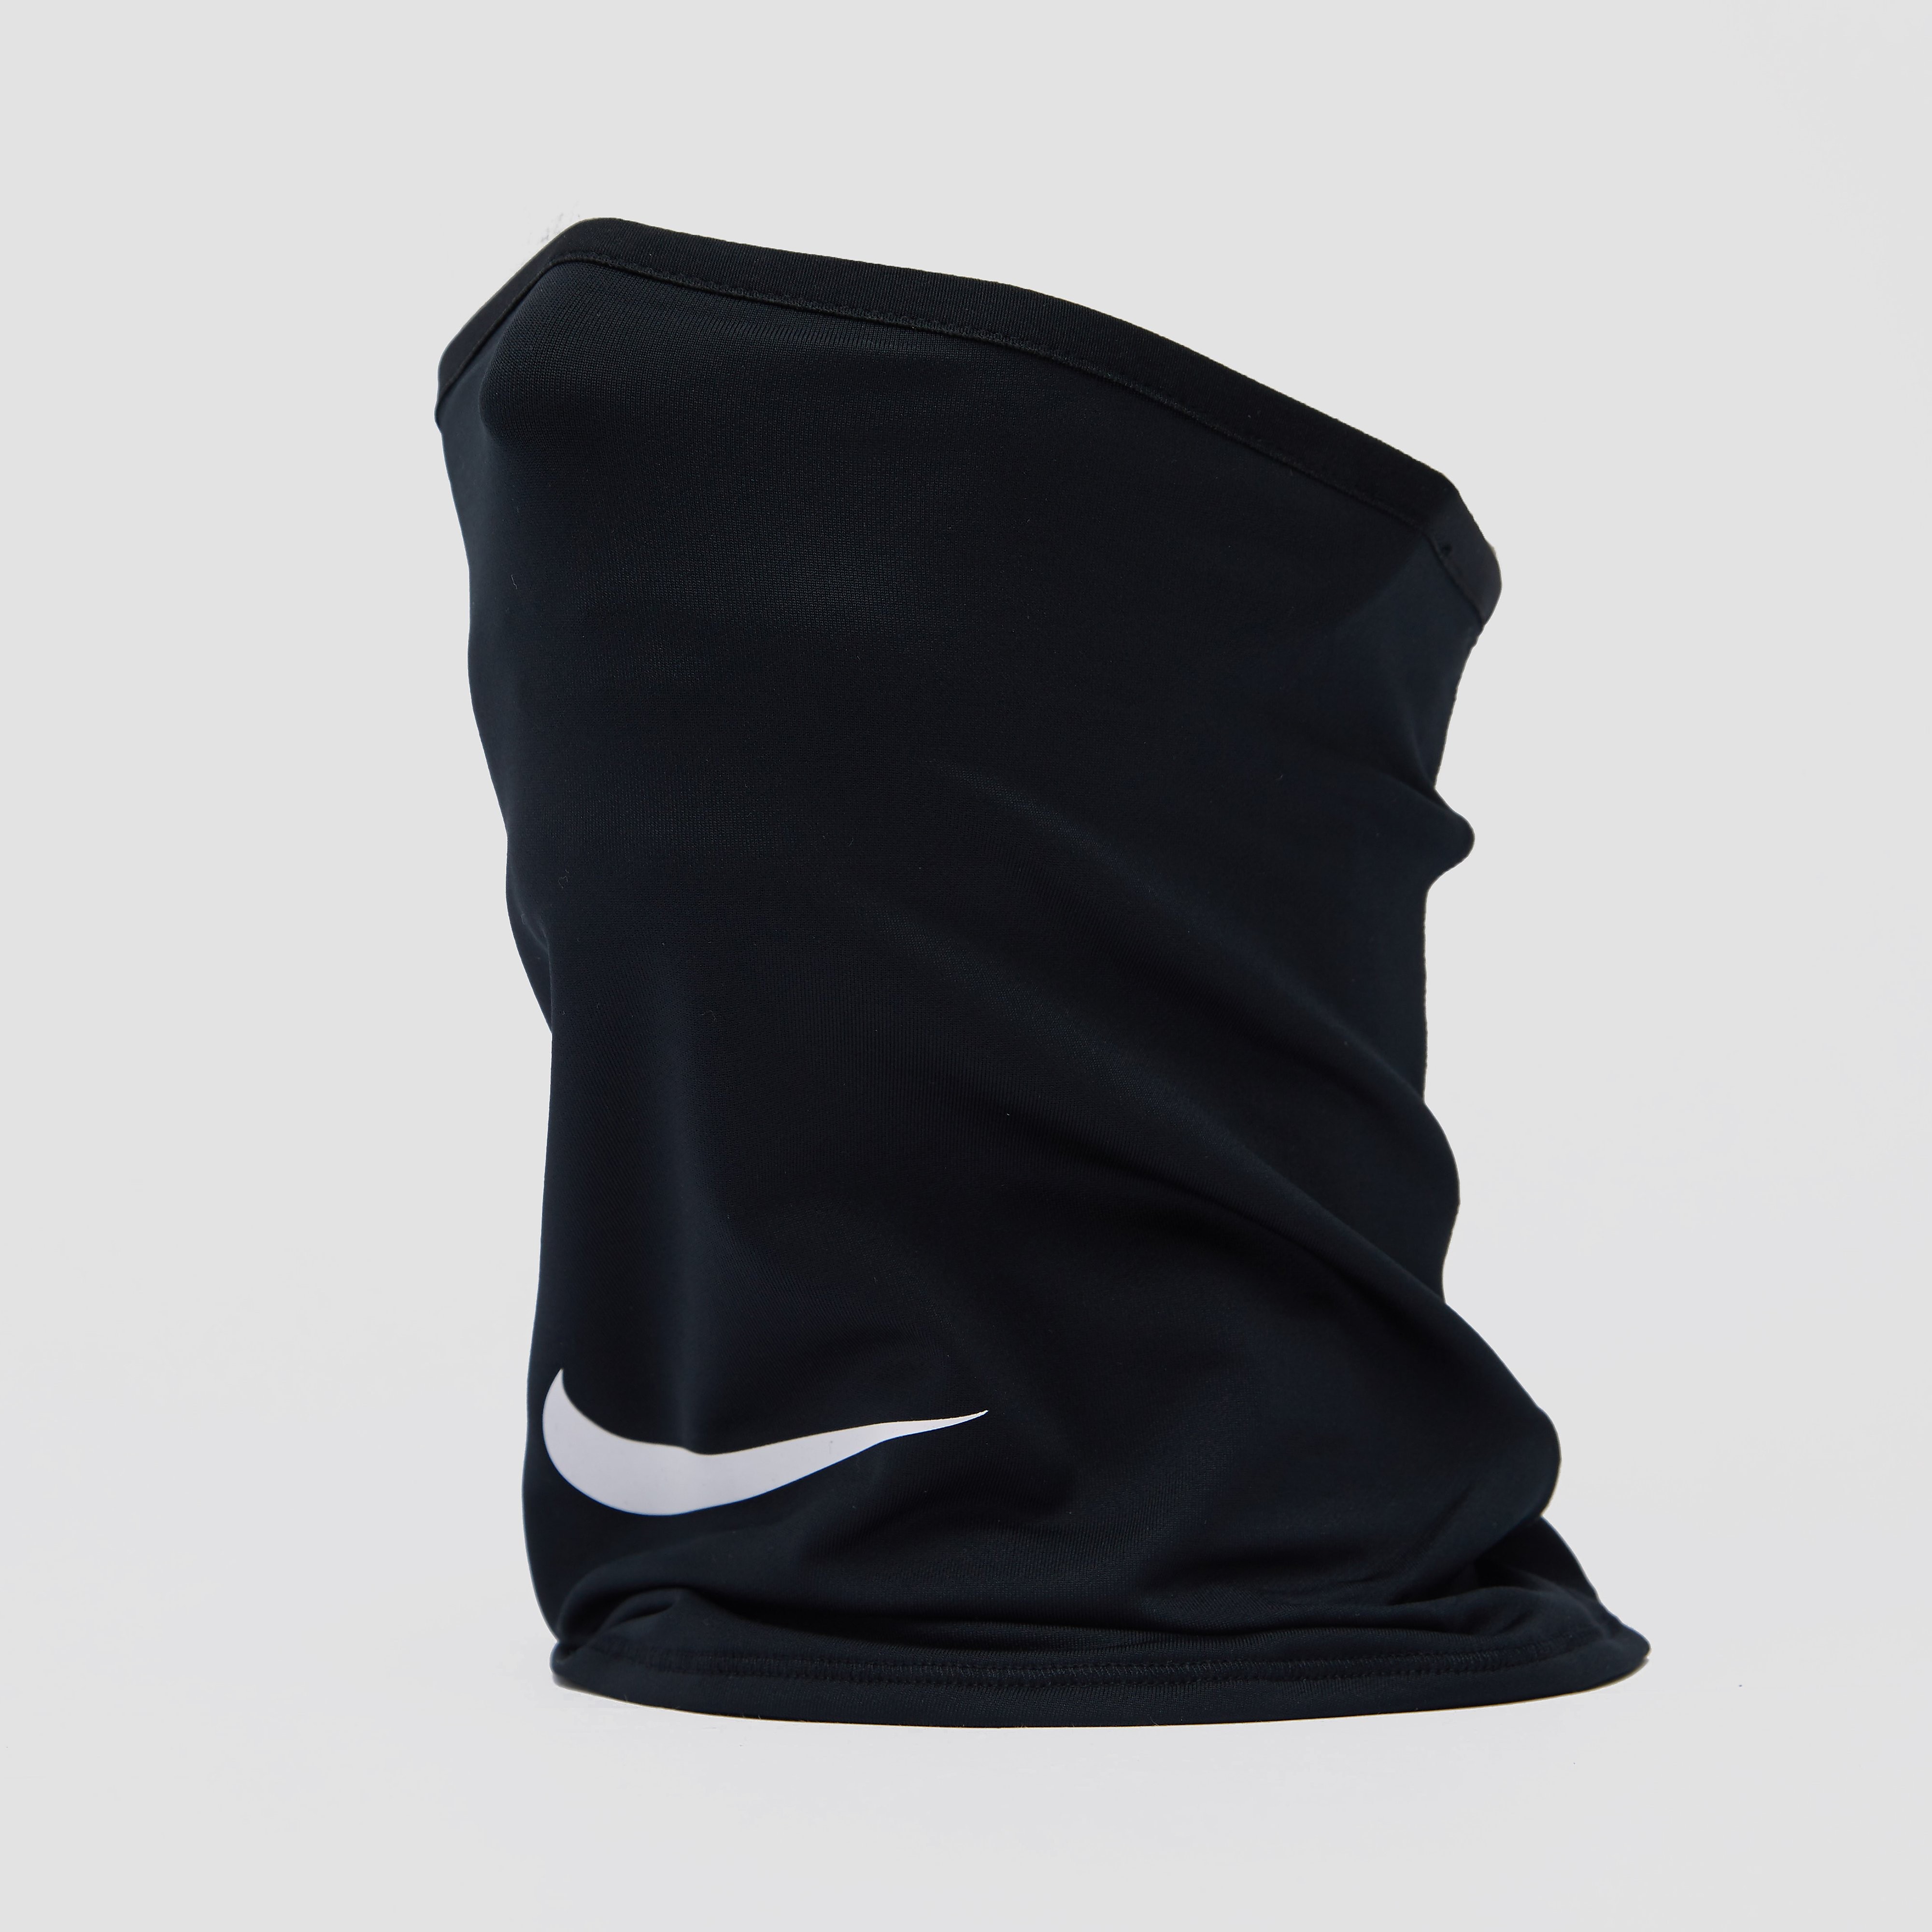 Nike Nike voetbalnekwarmer zwart heren